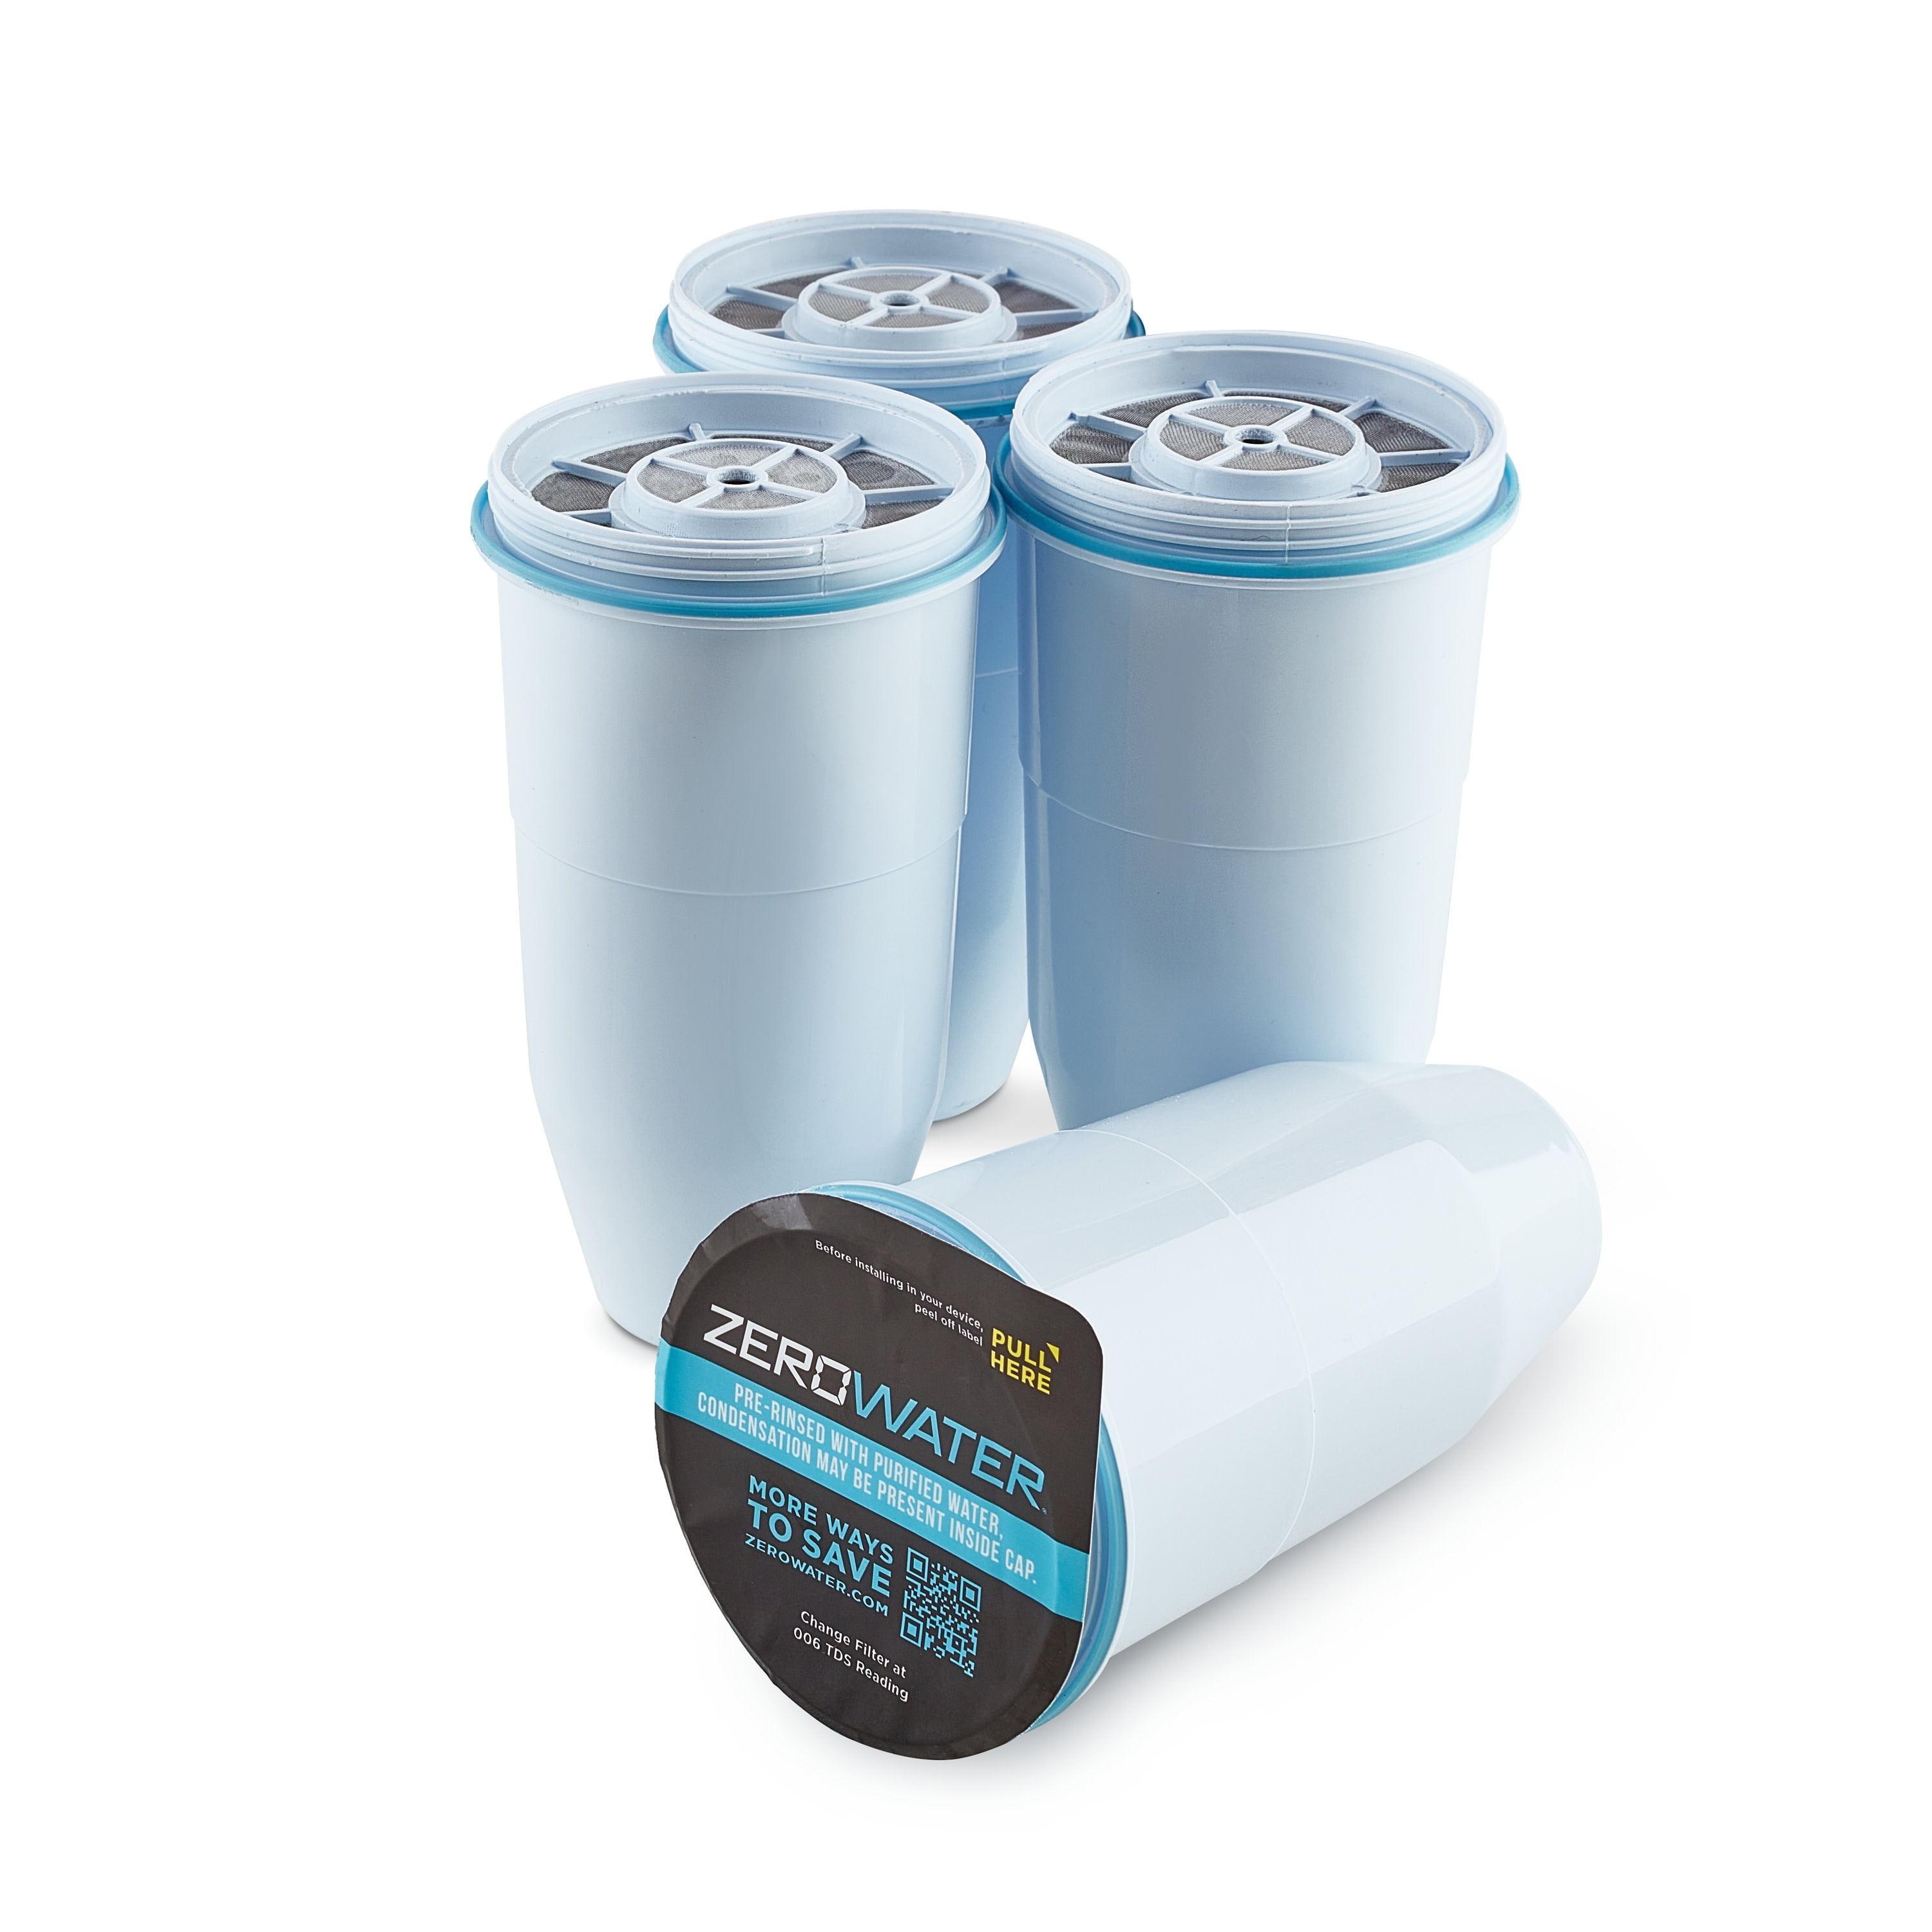 ZeroWater® 5 Stage Water Filter, 4 pk - Kroger